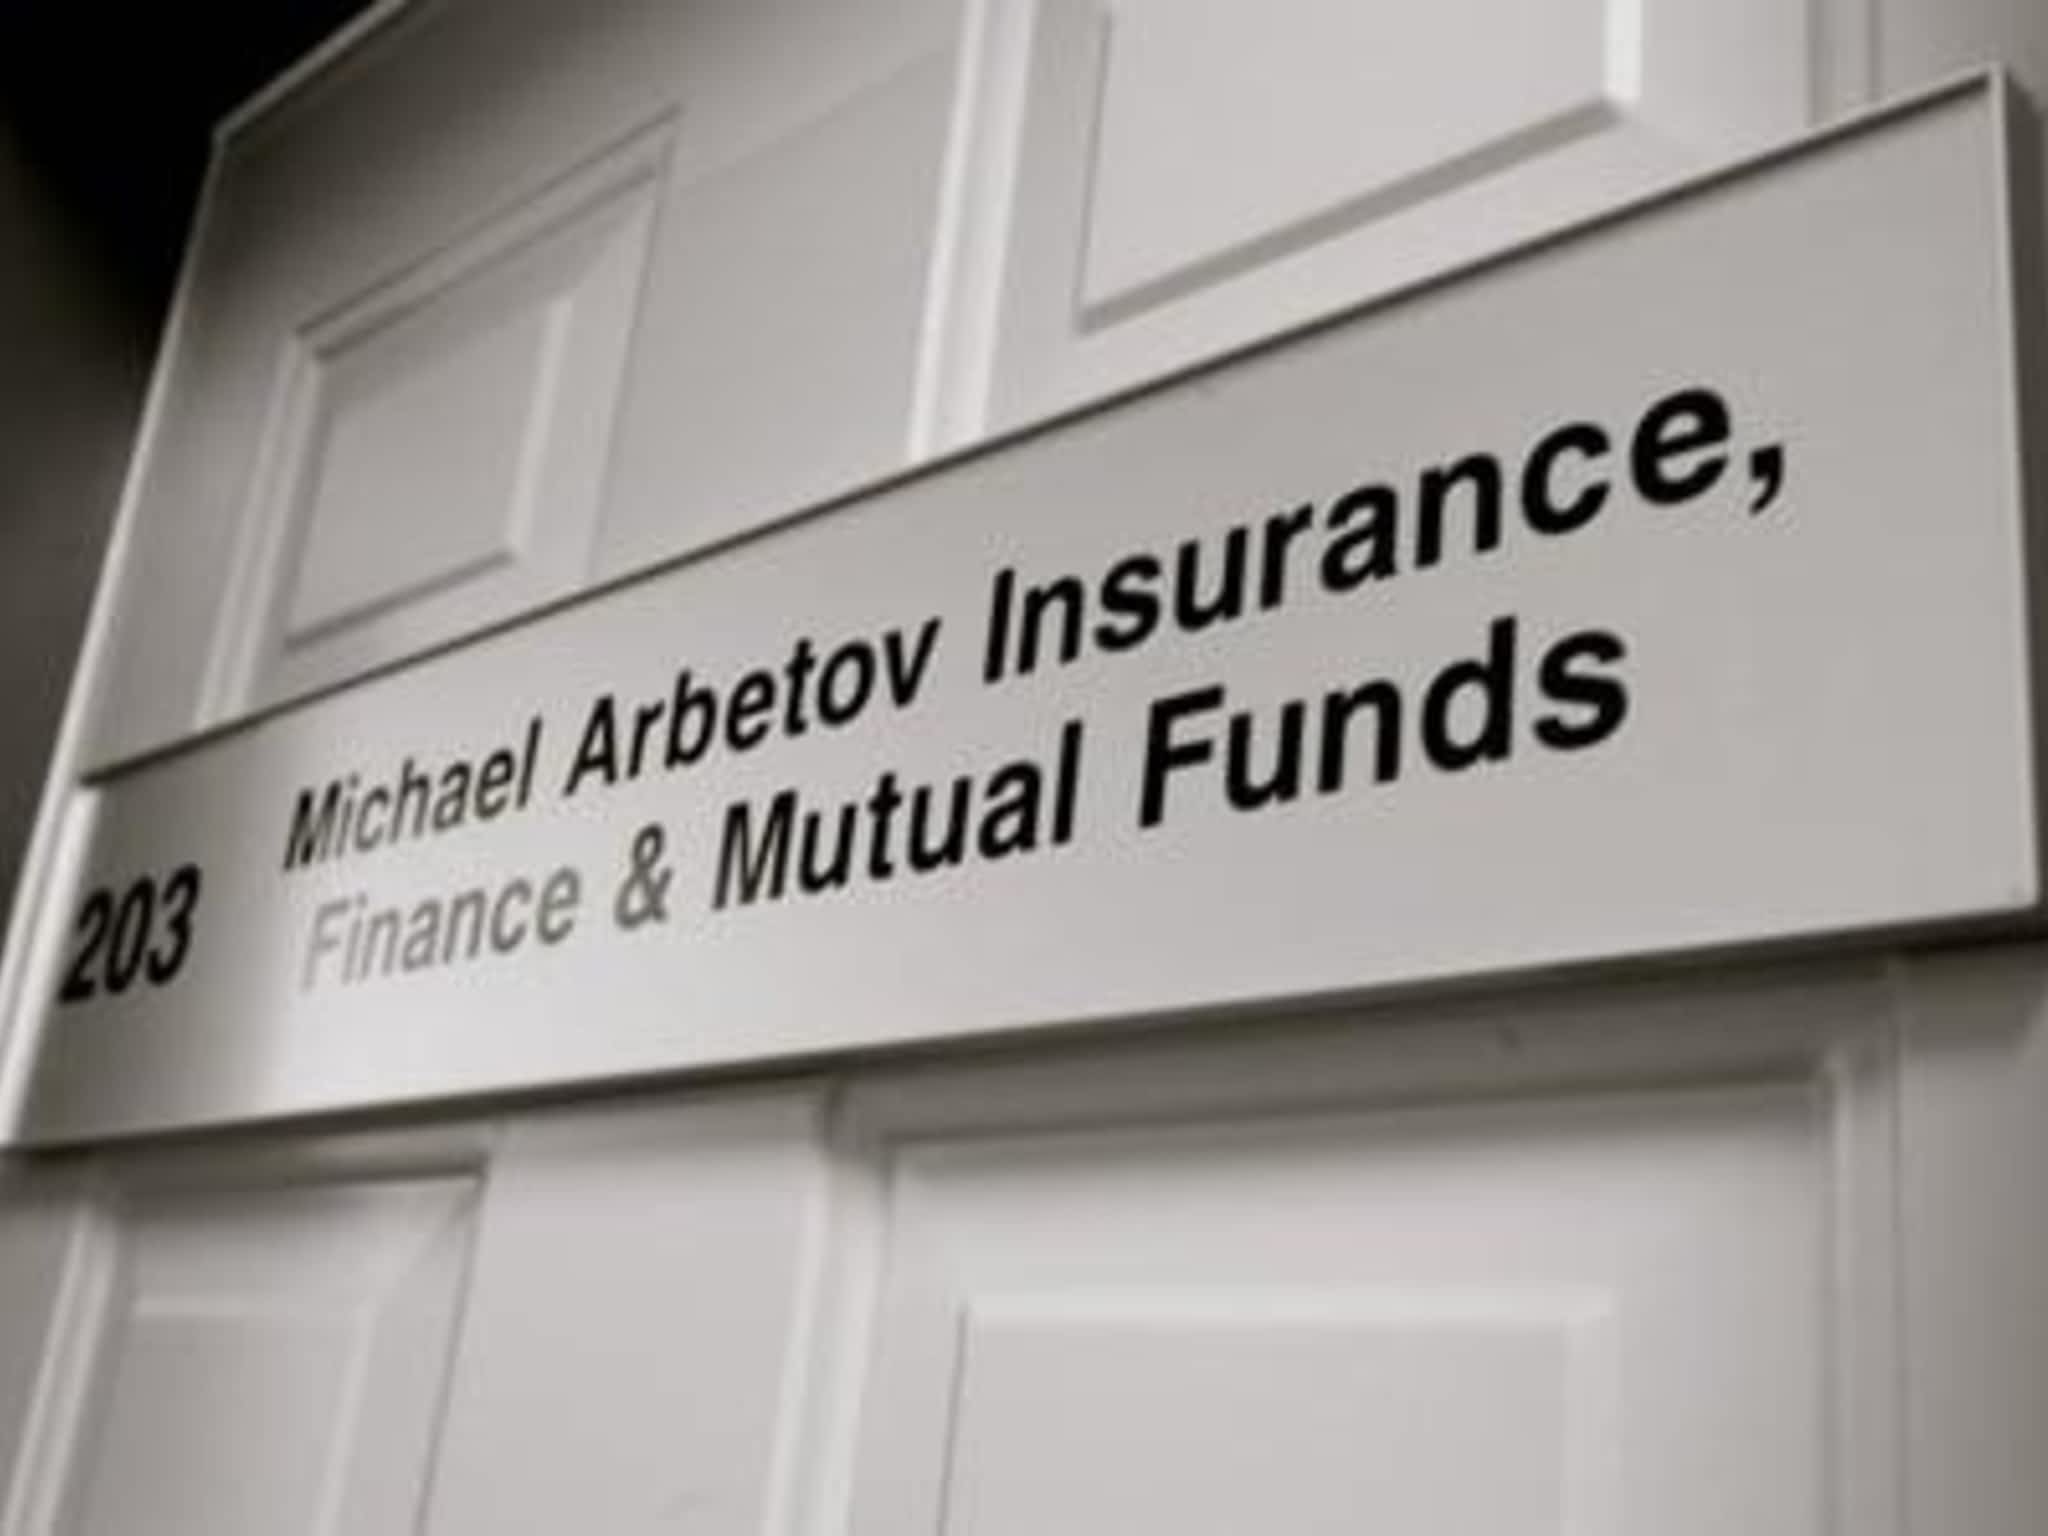 photo Arbetov Insurance & Wealth Management Inc